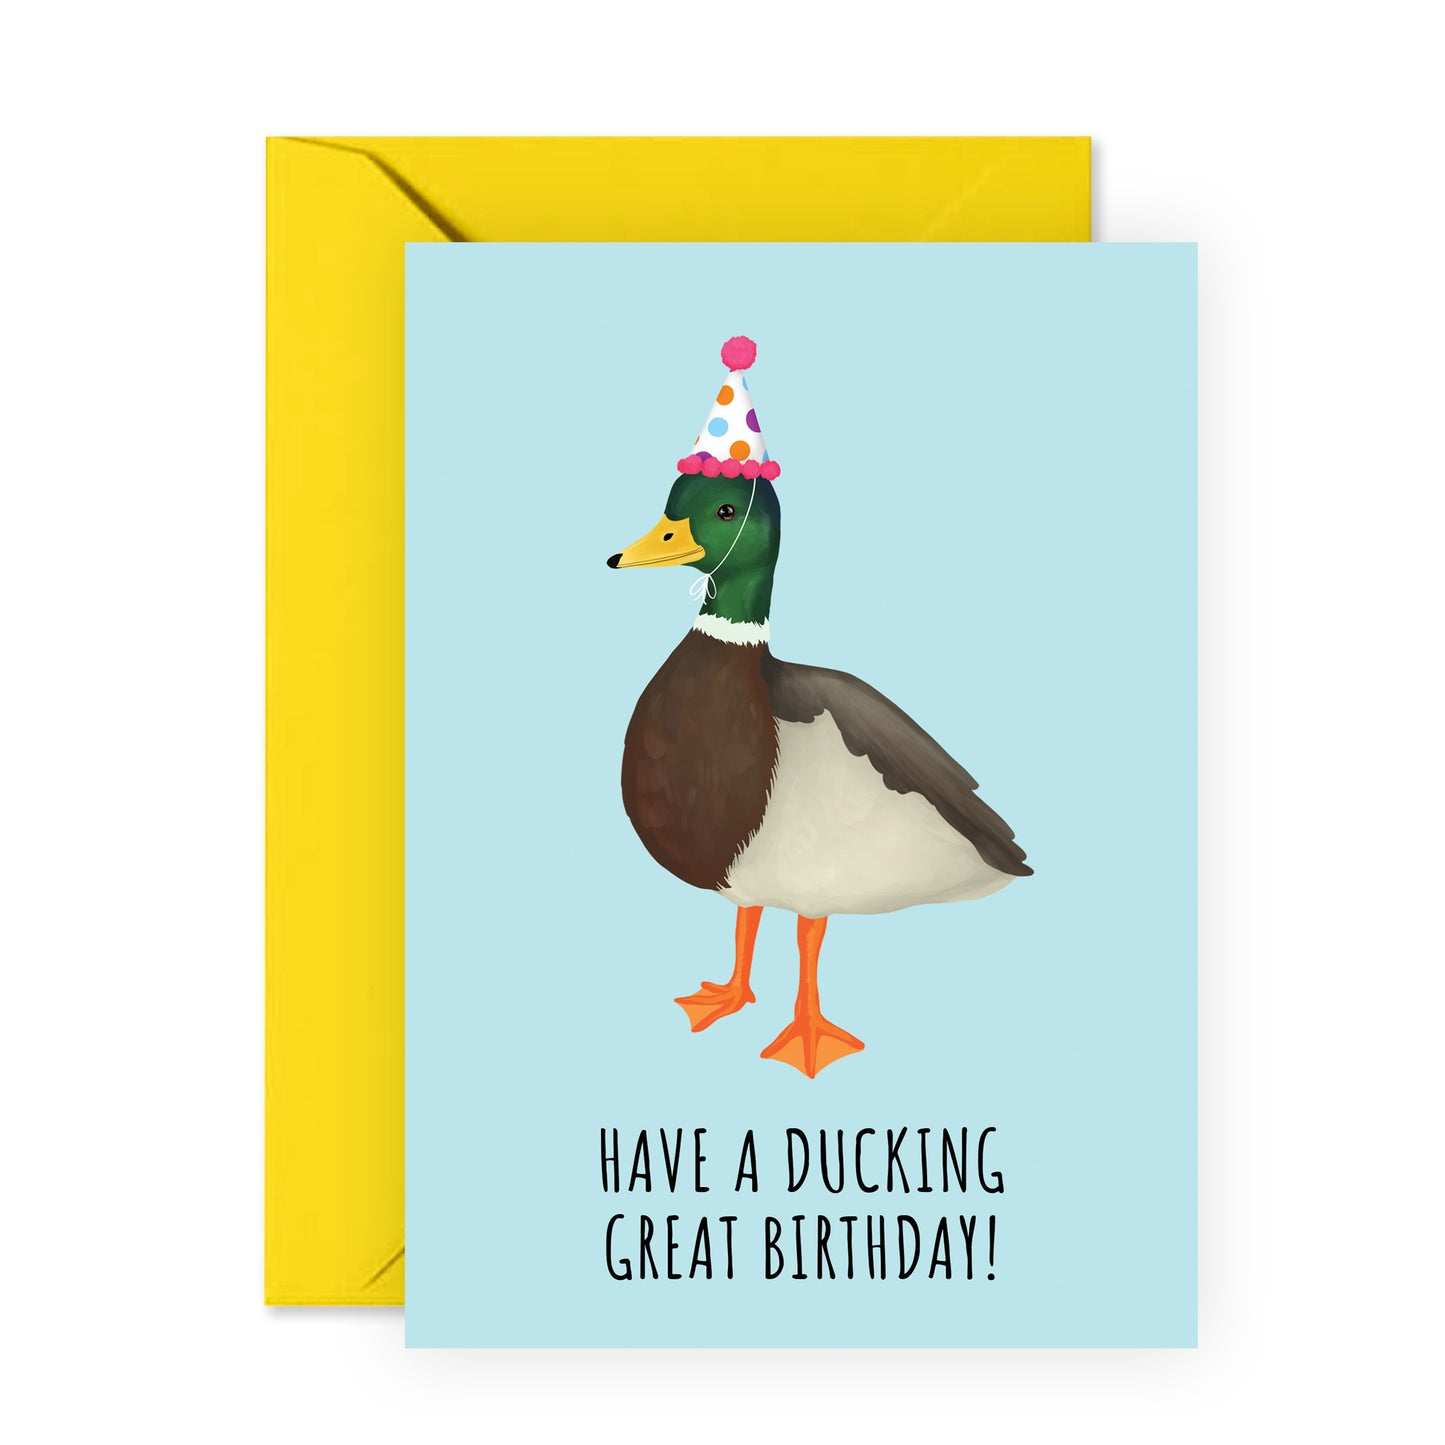 Funny Birthday Card - Ducking Great Birthday - For Men Women Him Her